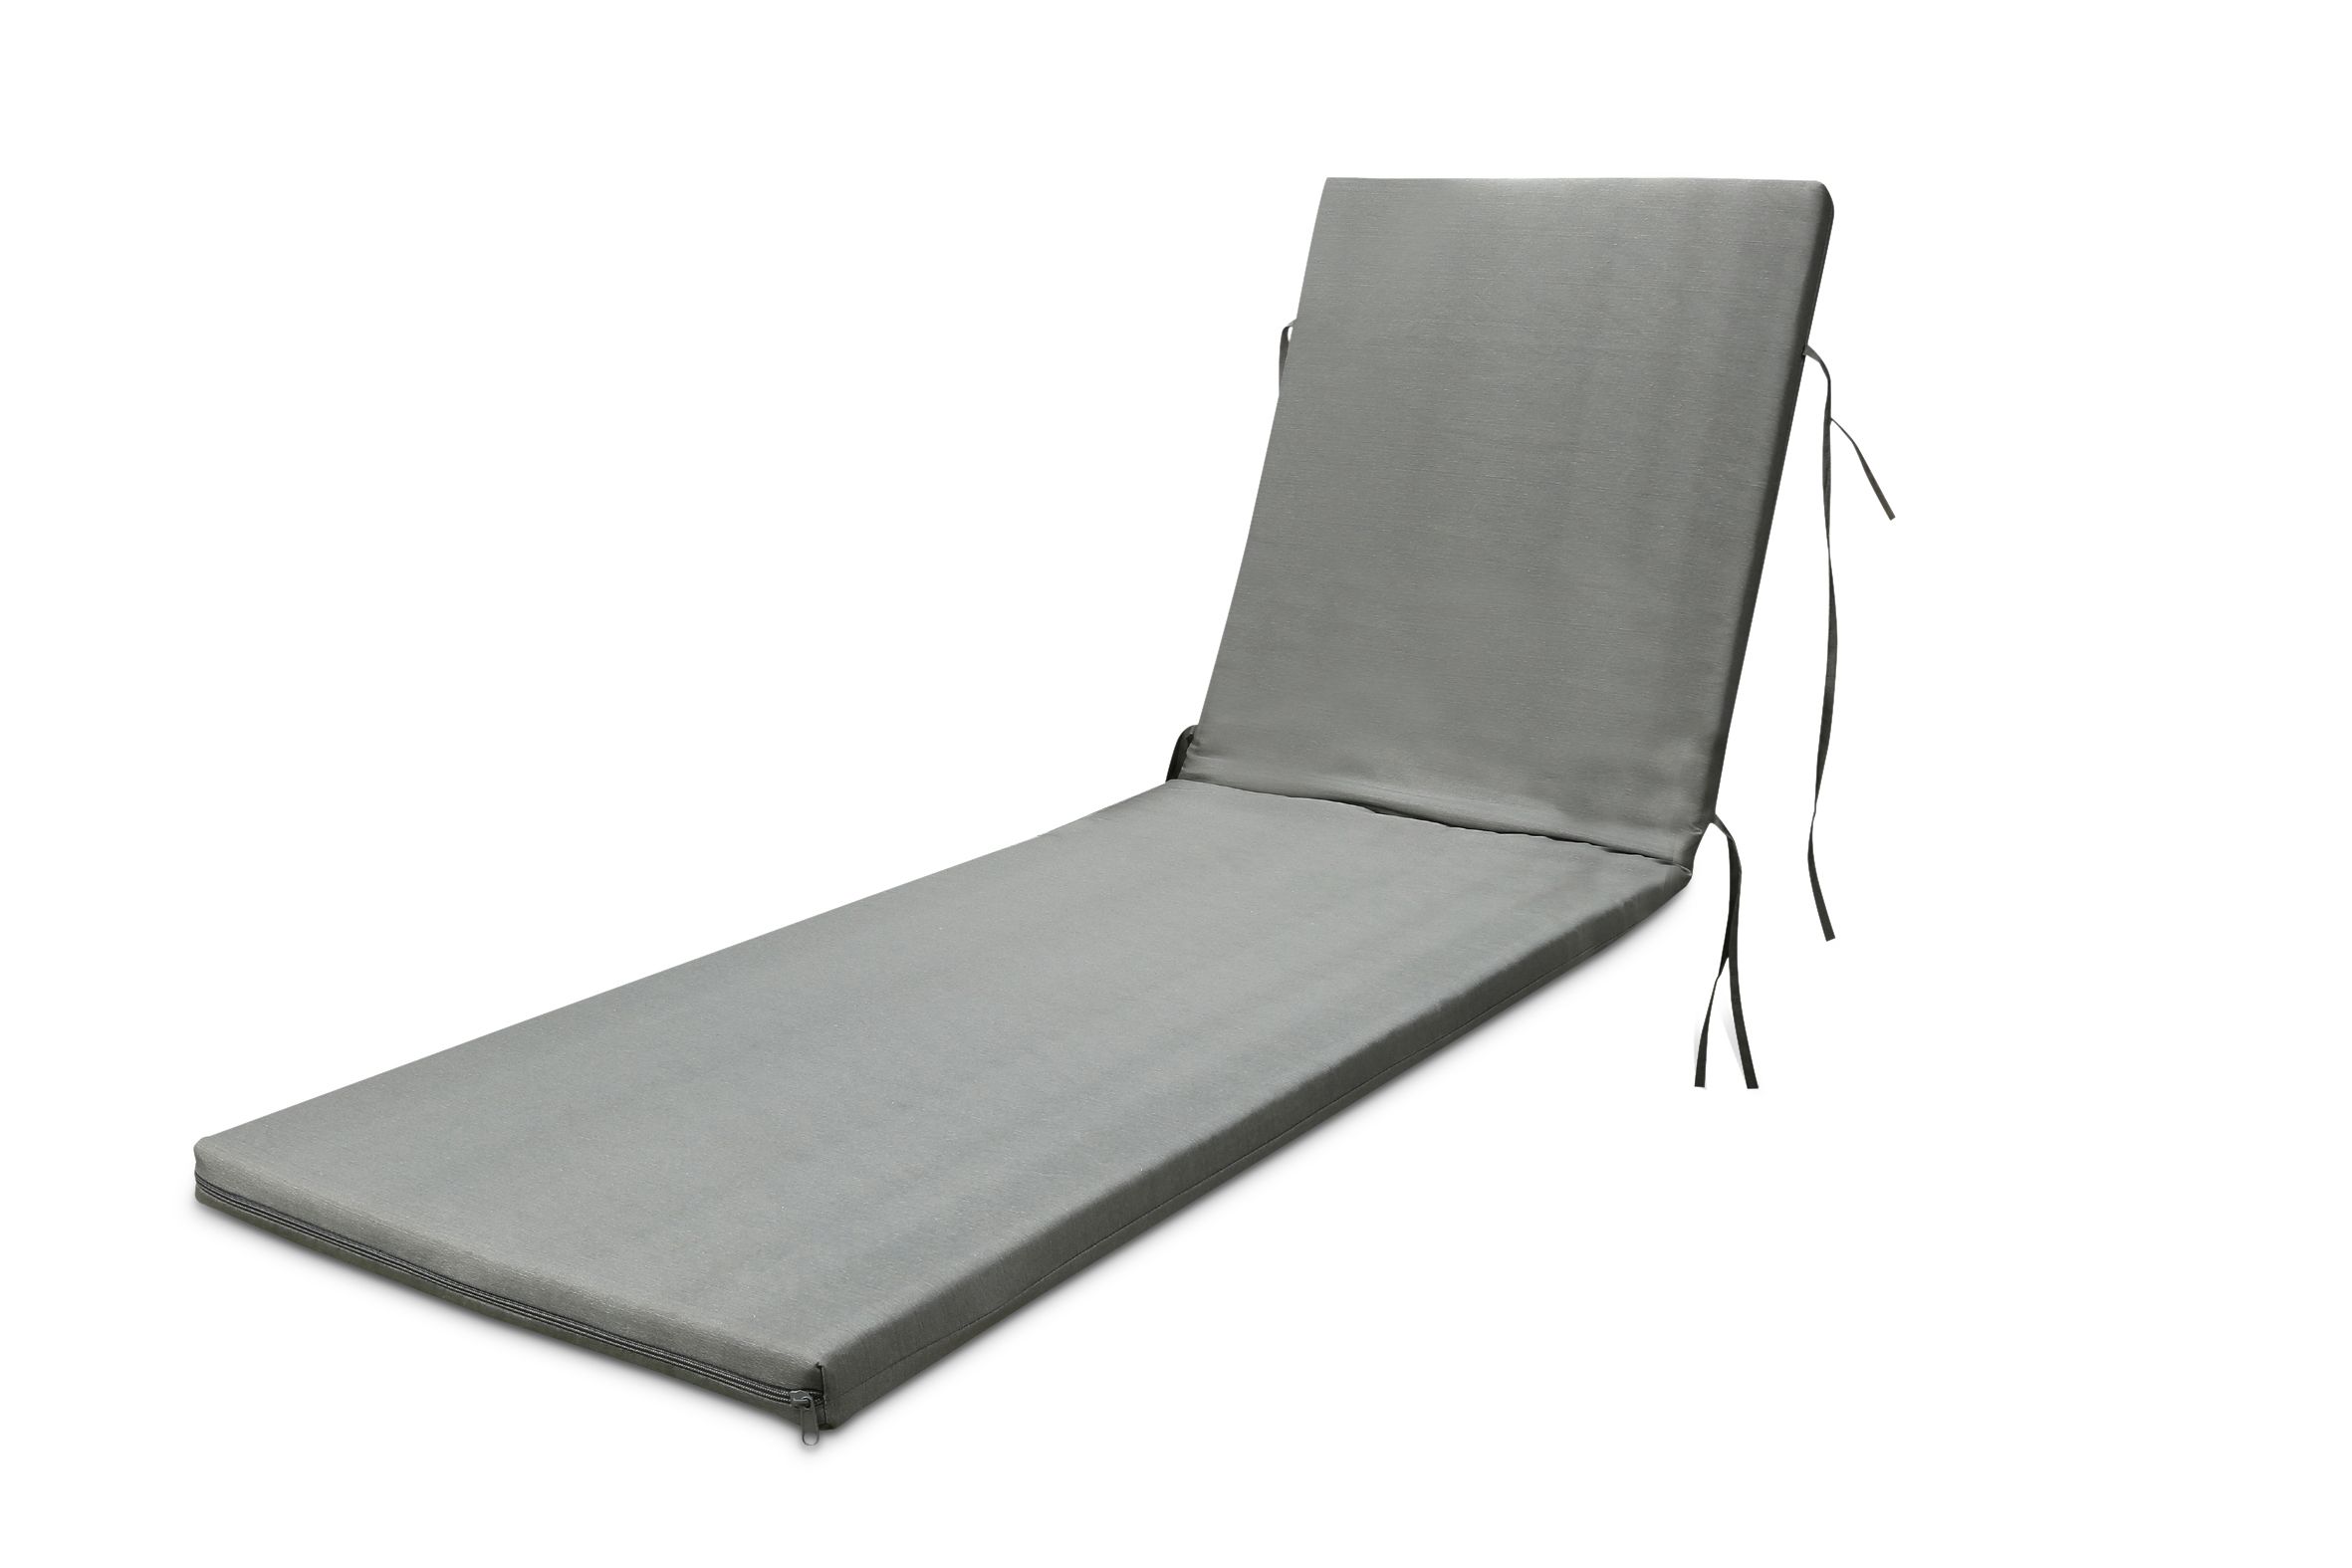 Cocos Griffin grey Outdoor Sunlounger cushion (L)185cm x (W)55cm